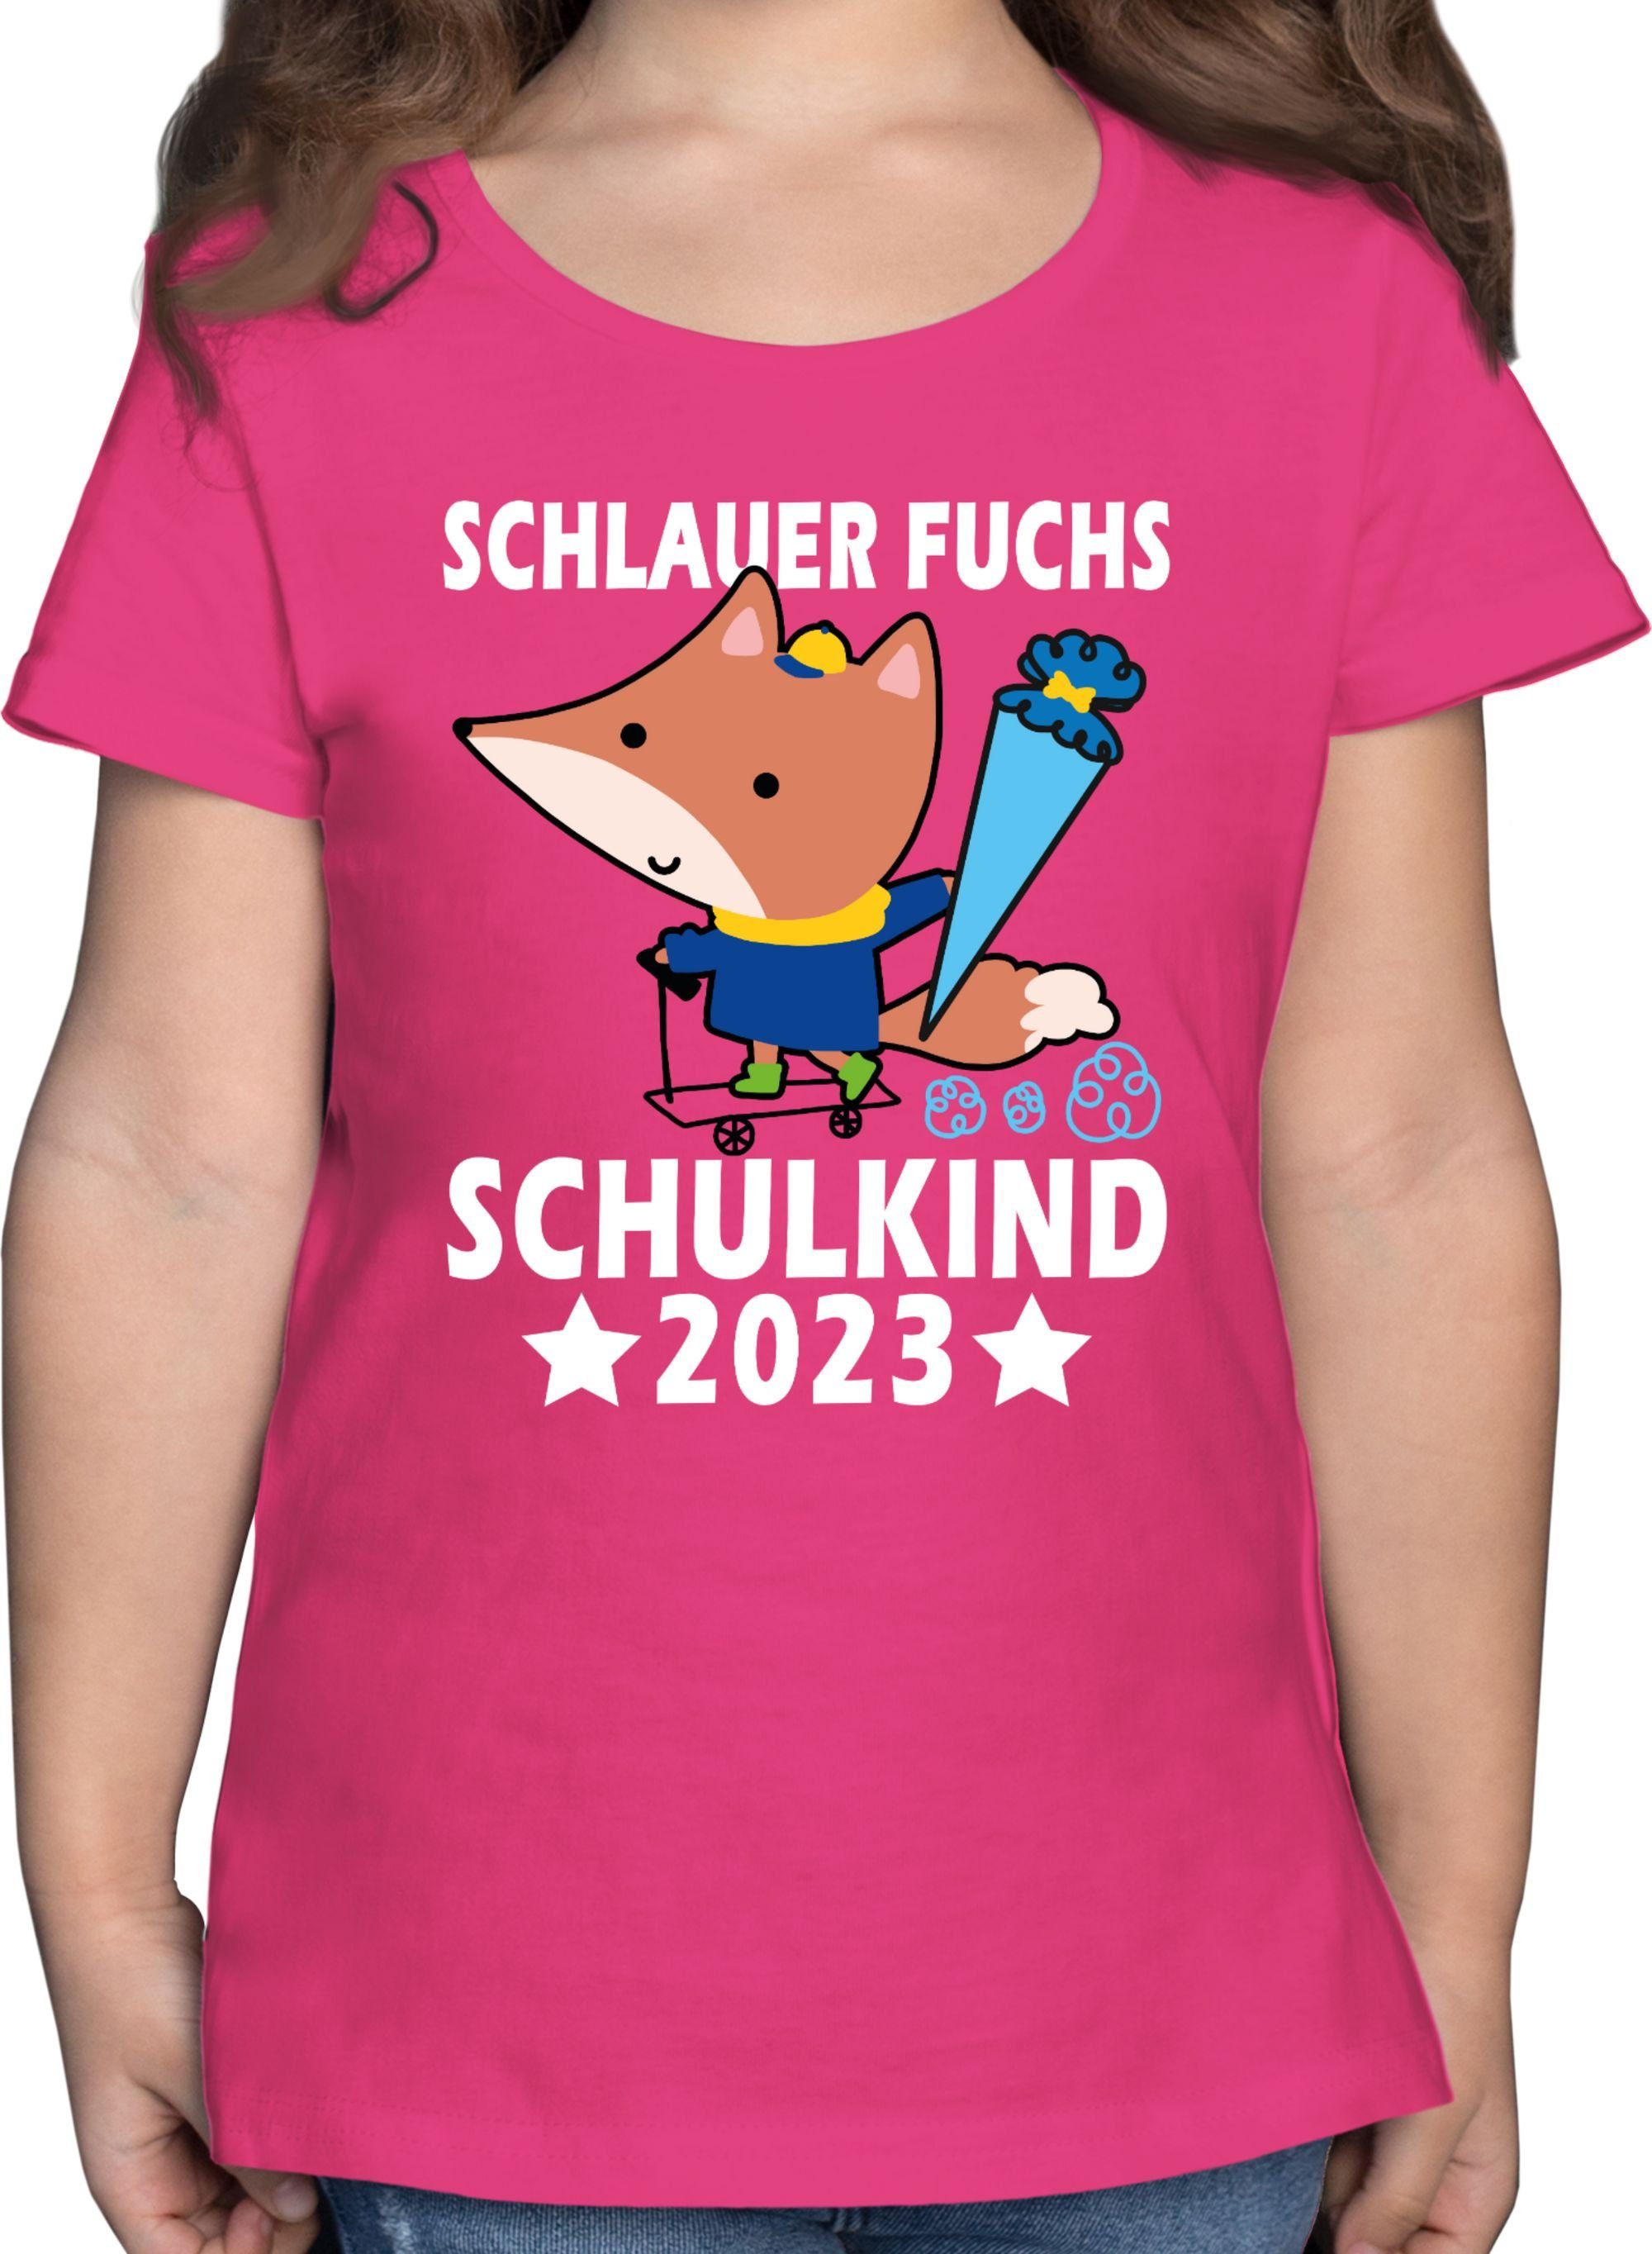 Shirtracer T-Shirt Schlauer Fuchs Schulkind Fuchsia 1 Mädchen 2023 Einschulung